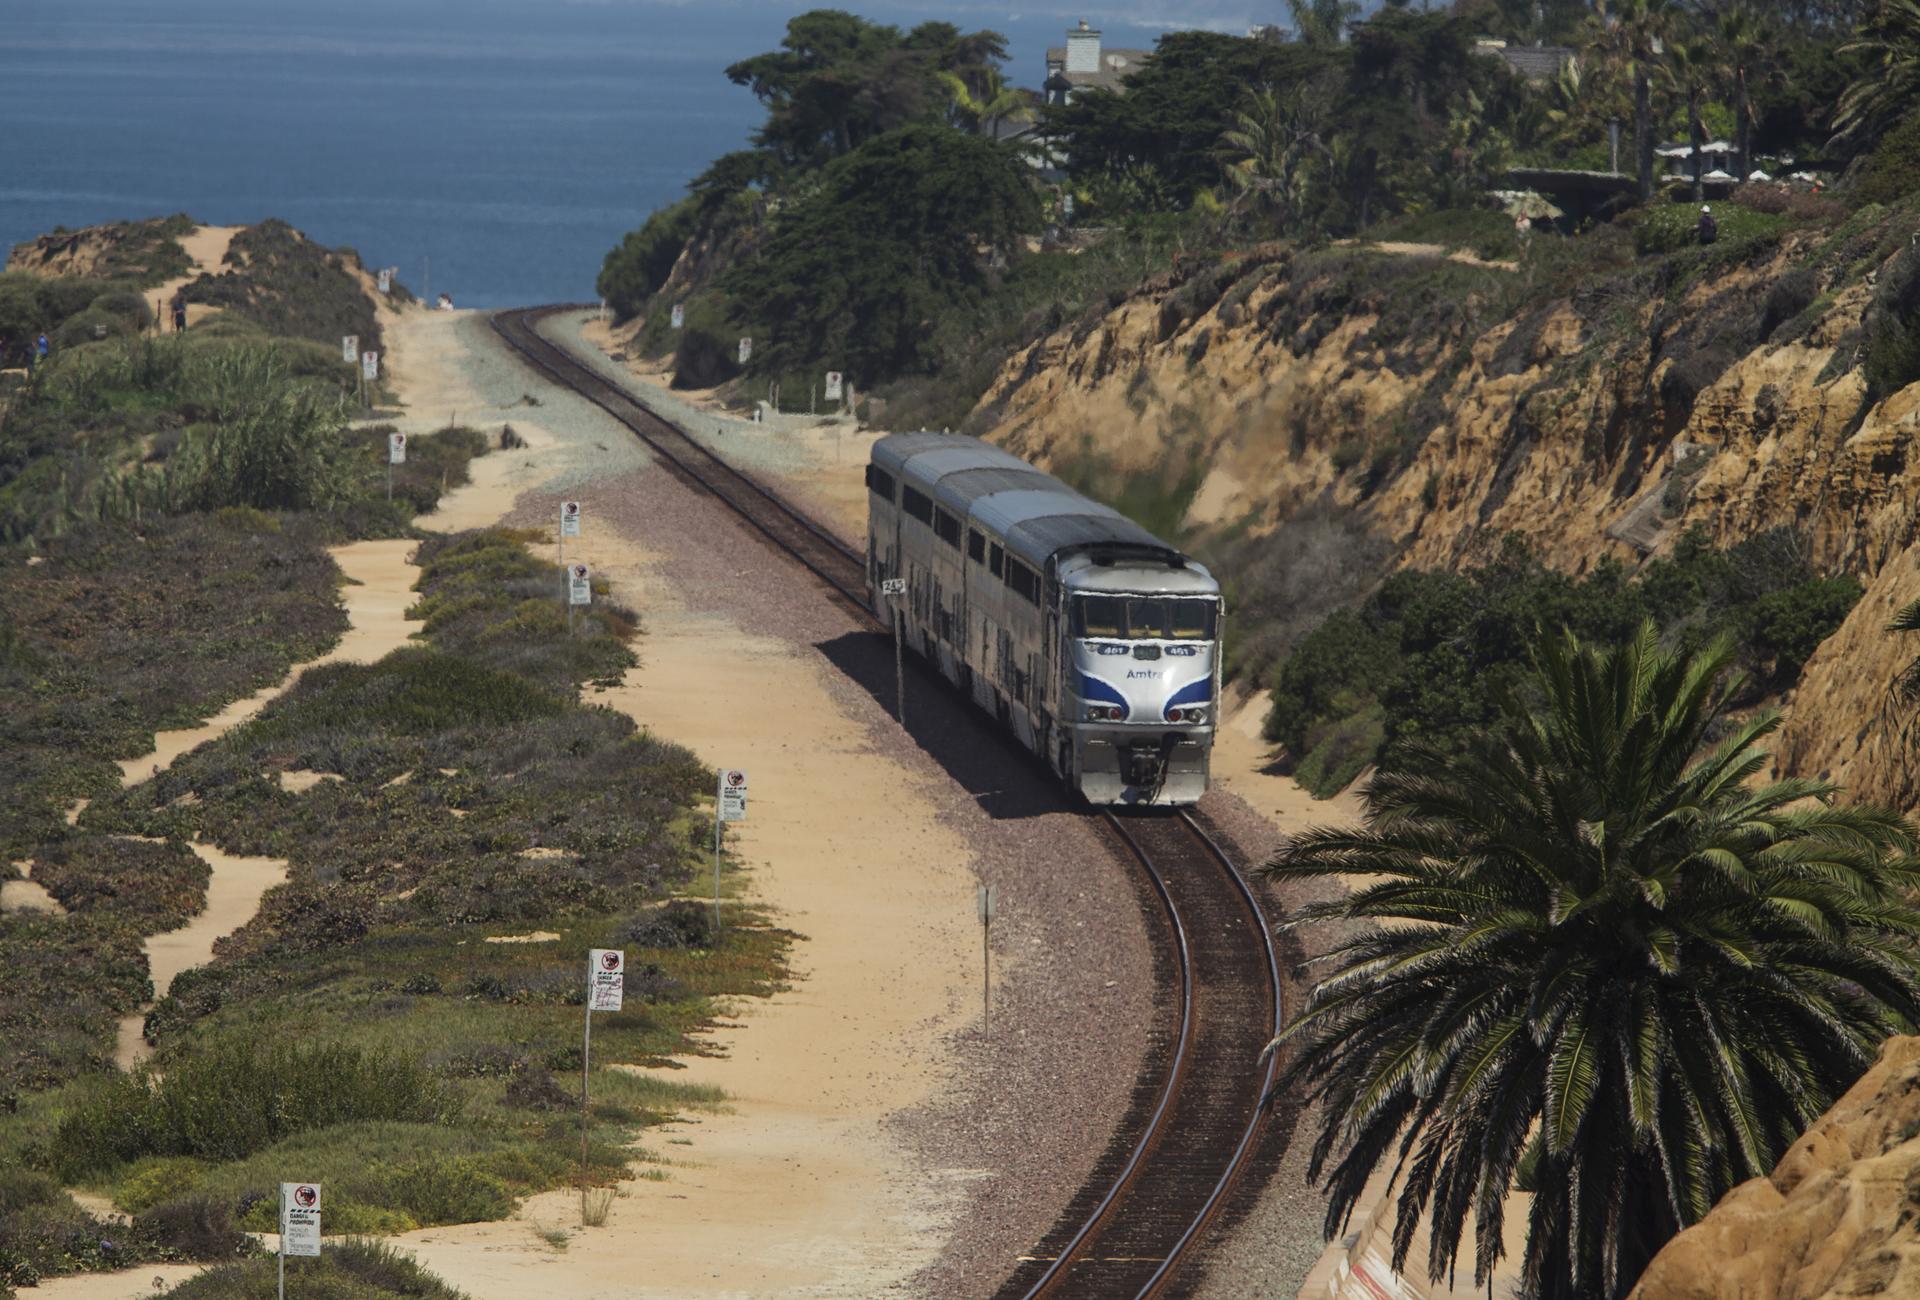 An Amtrak passenger train makes its way along the coastline